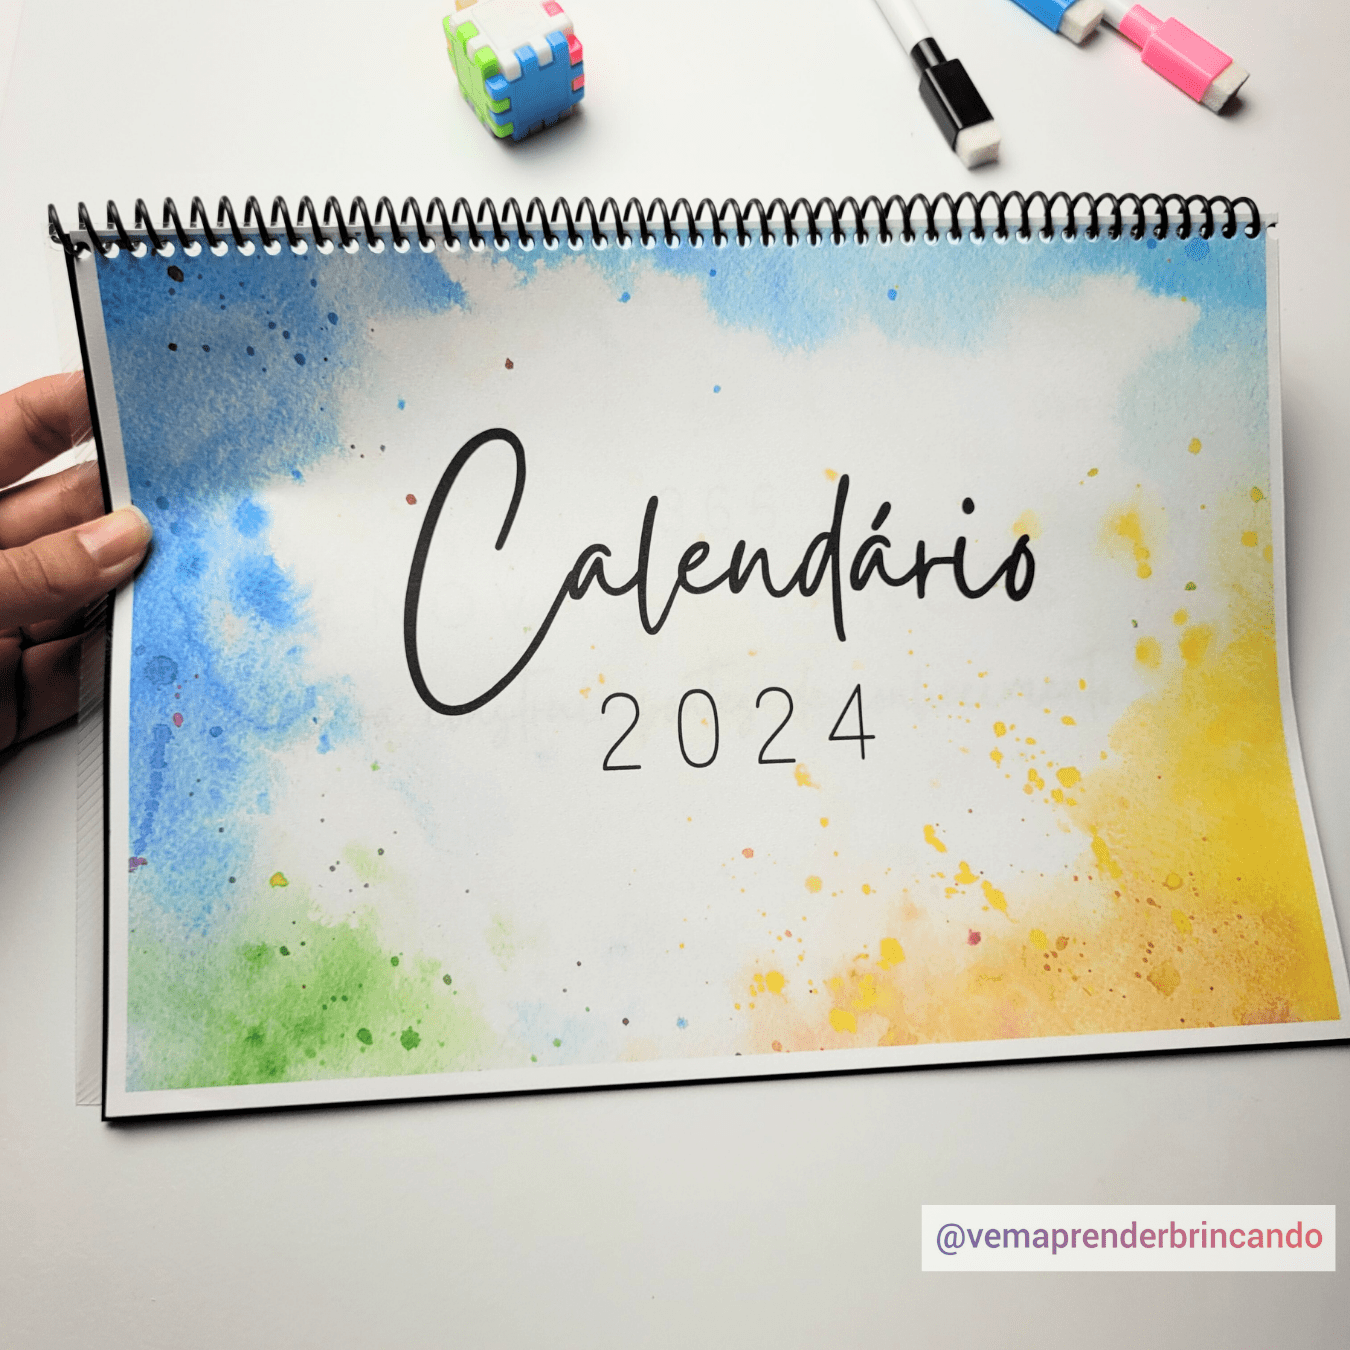 Calendario-Escolar-_datas-comemorativas_-1_1